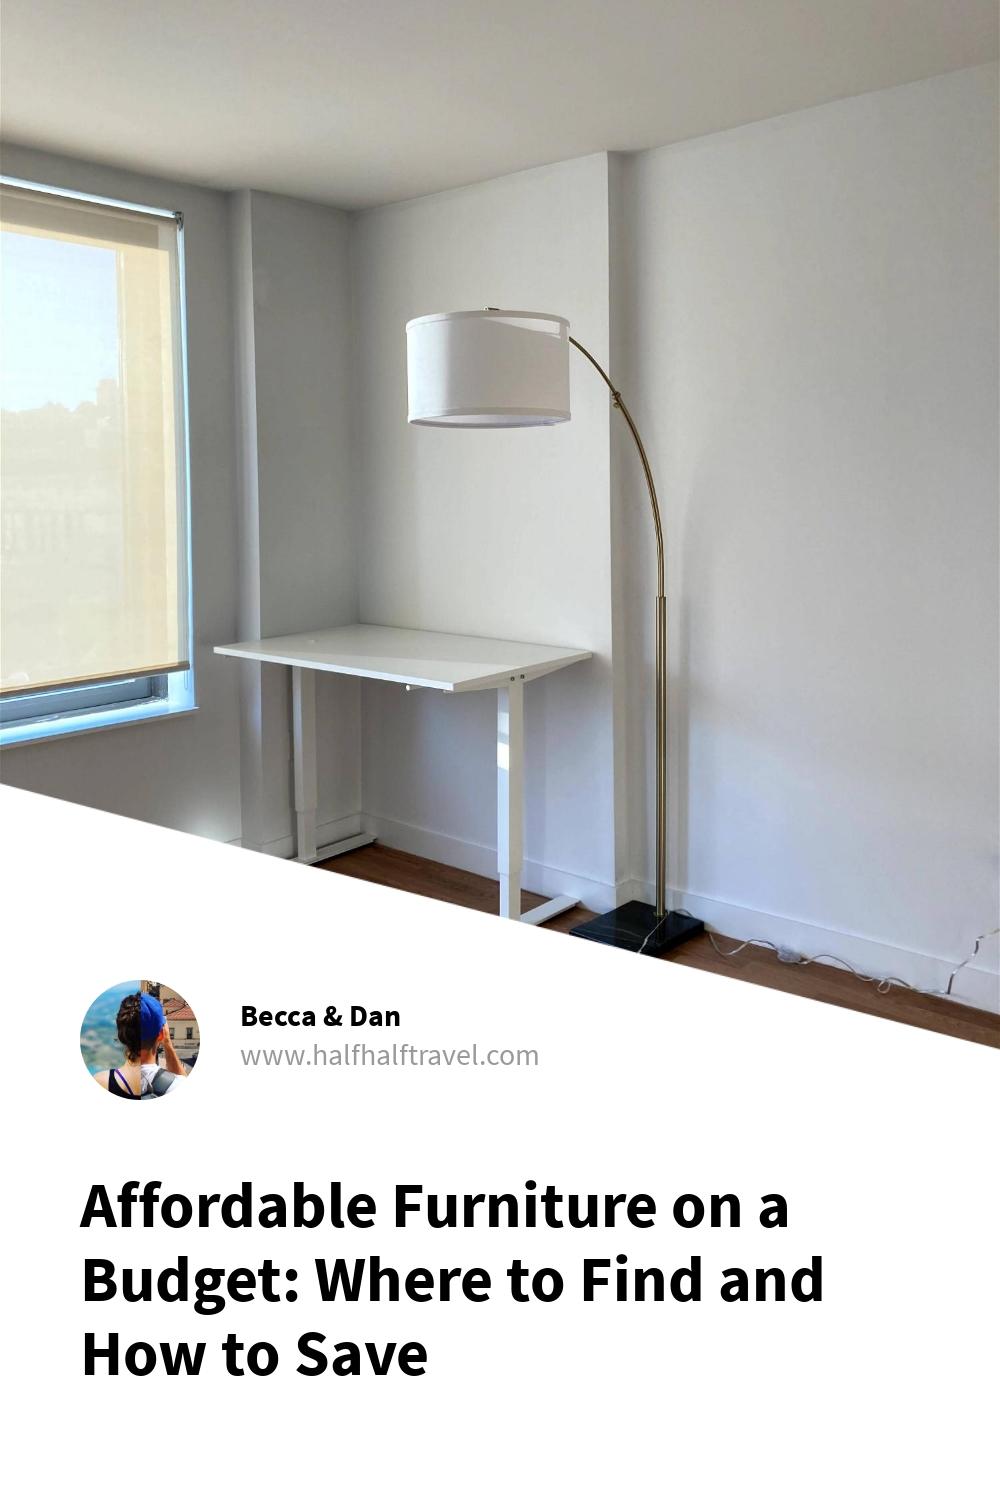 The Secret to Finding Super Cheap Furniture